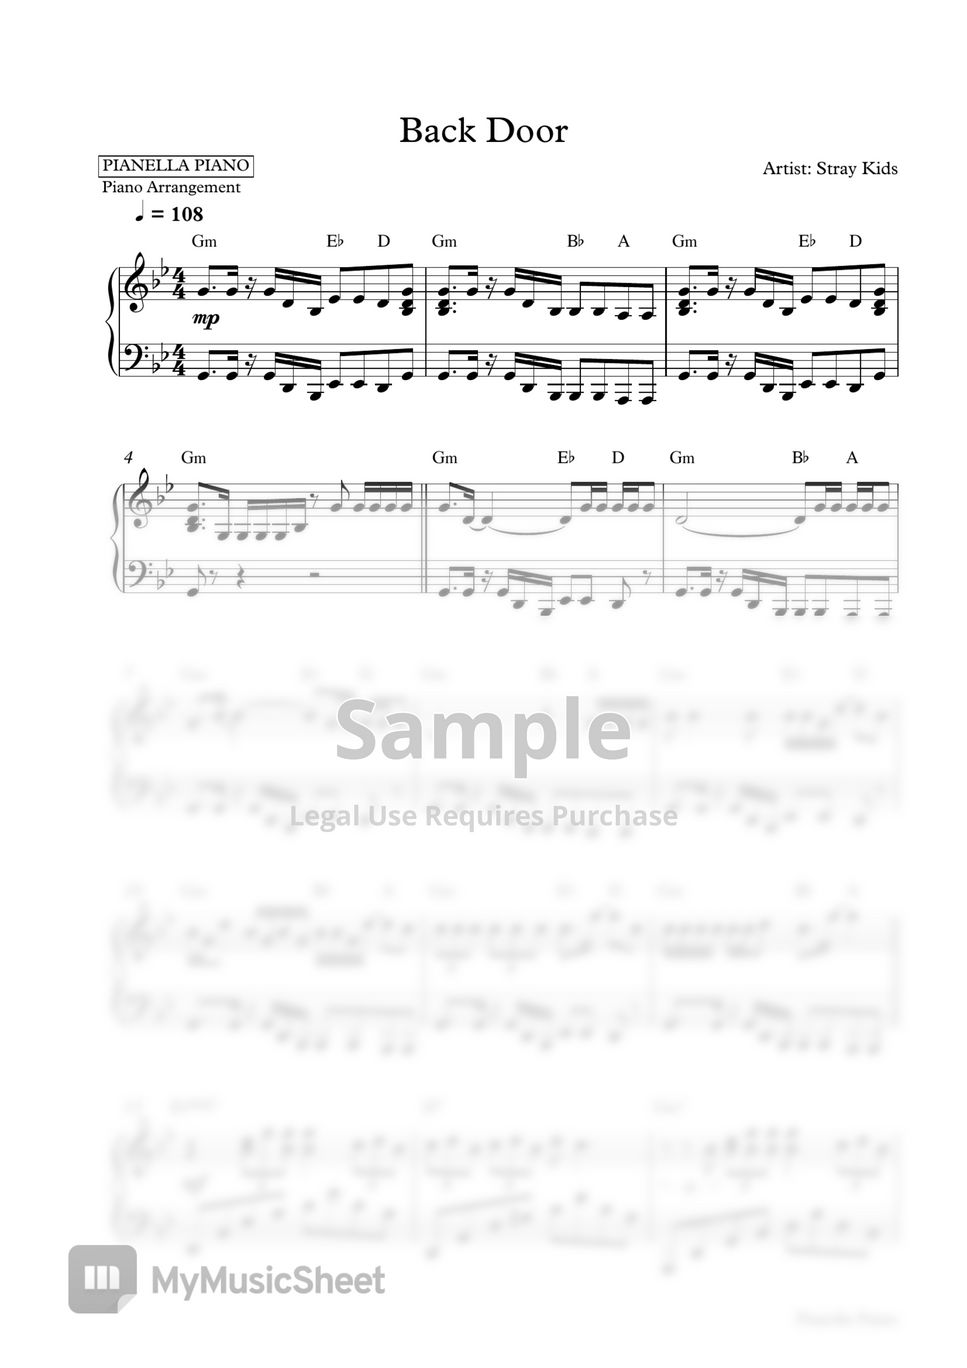 Stray Kids - Back Door (Piano Sheet) by Pianella Piano